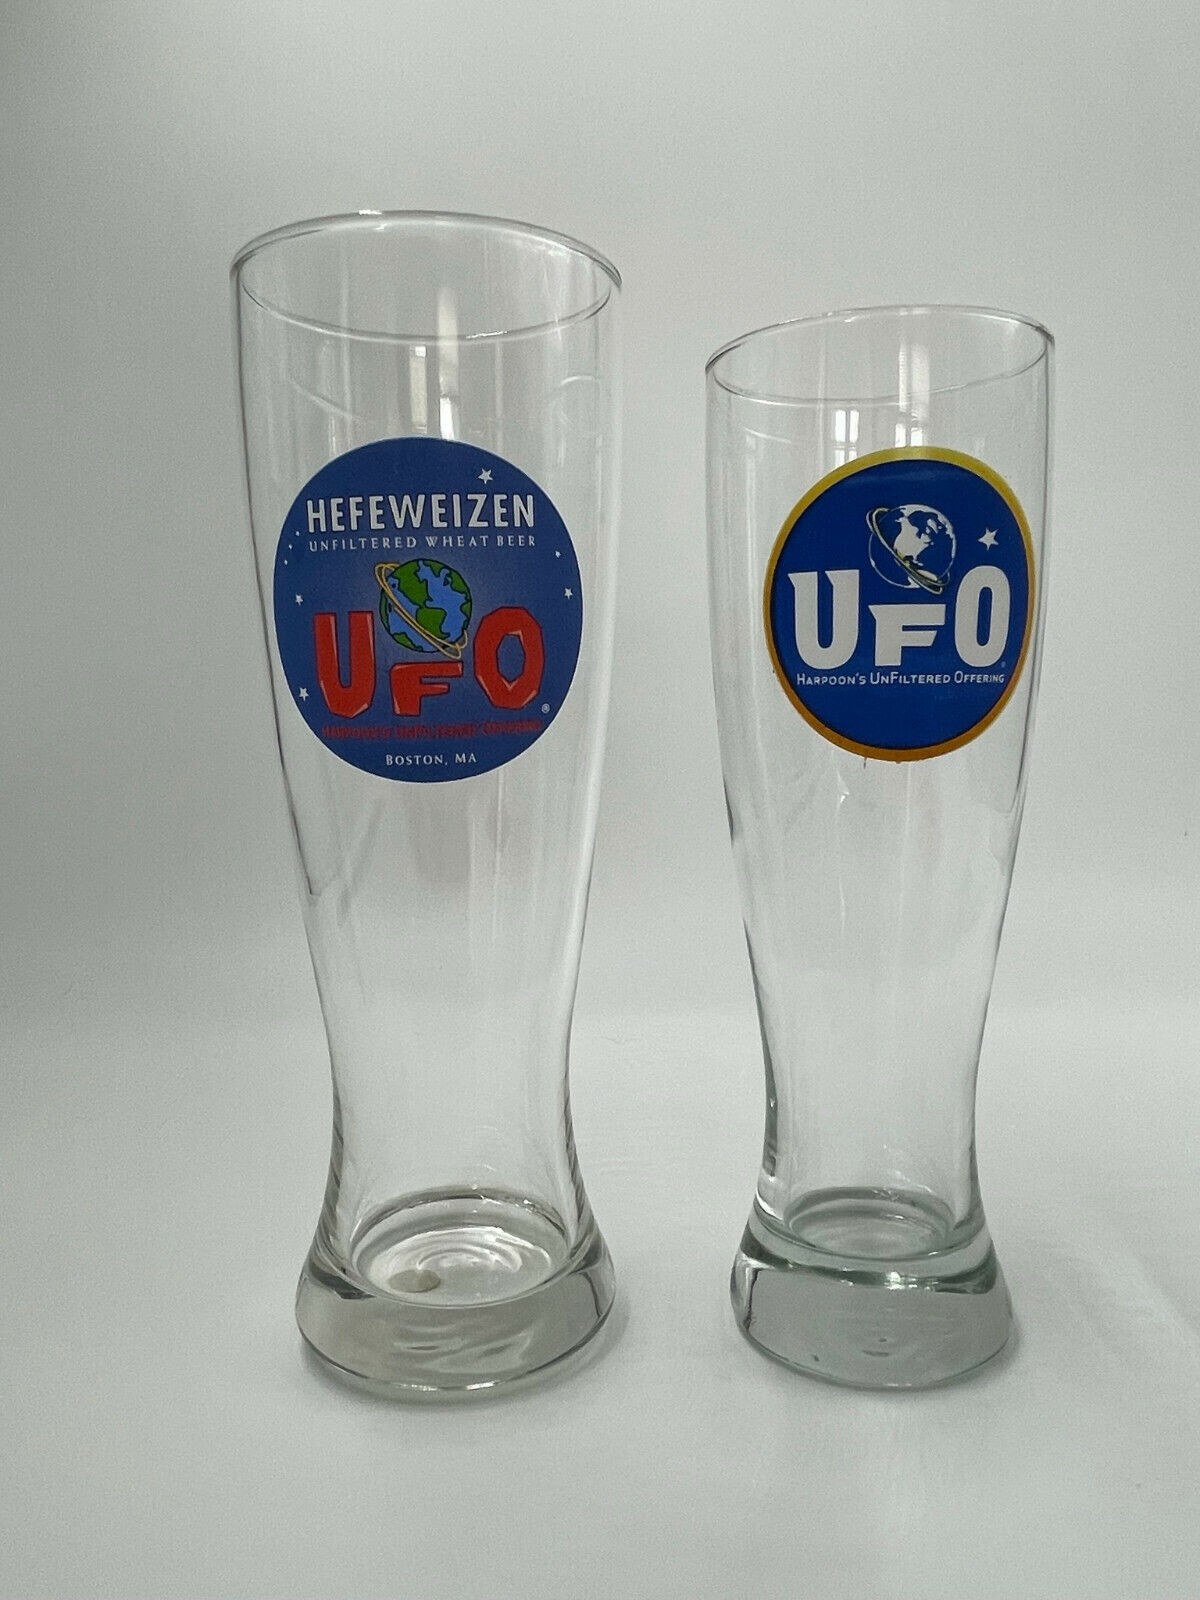 Harpoon Unfiltered Wheat Beer UFO Glass Set UFO Unfiltered Offering Hefeweizen  Harpoon